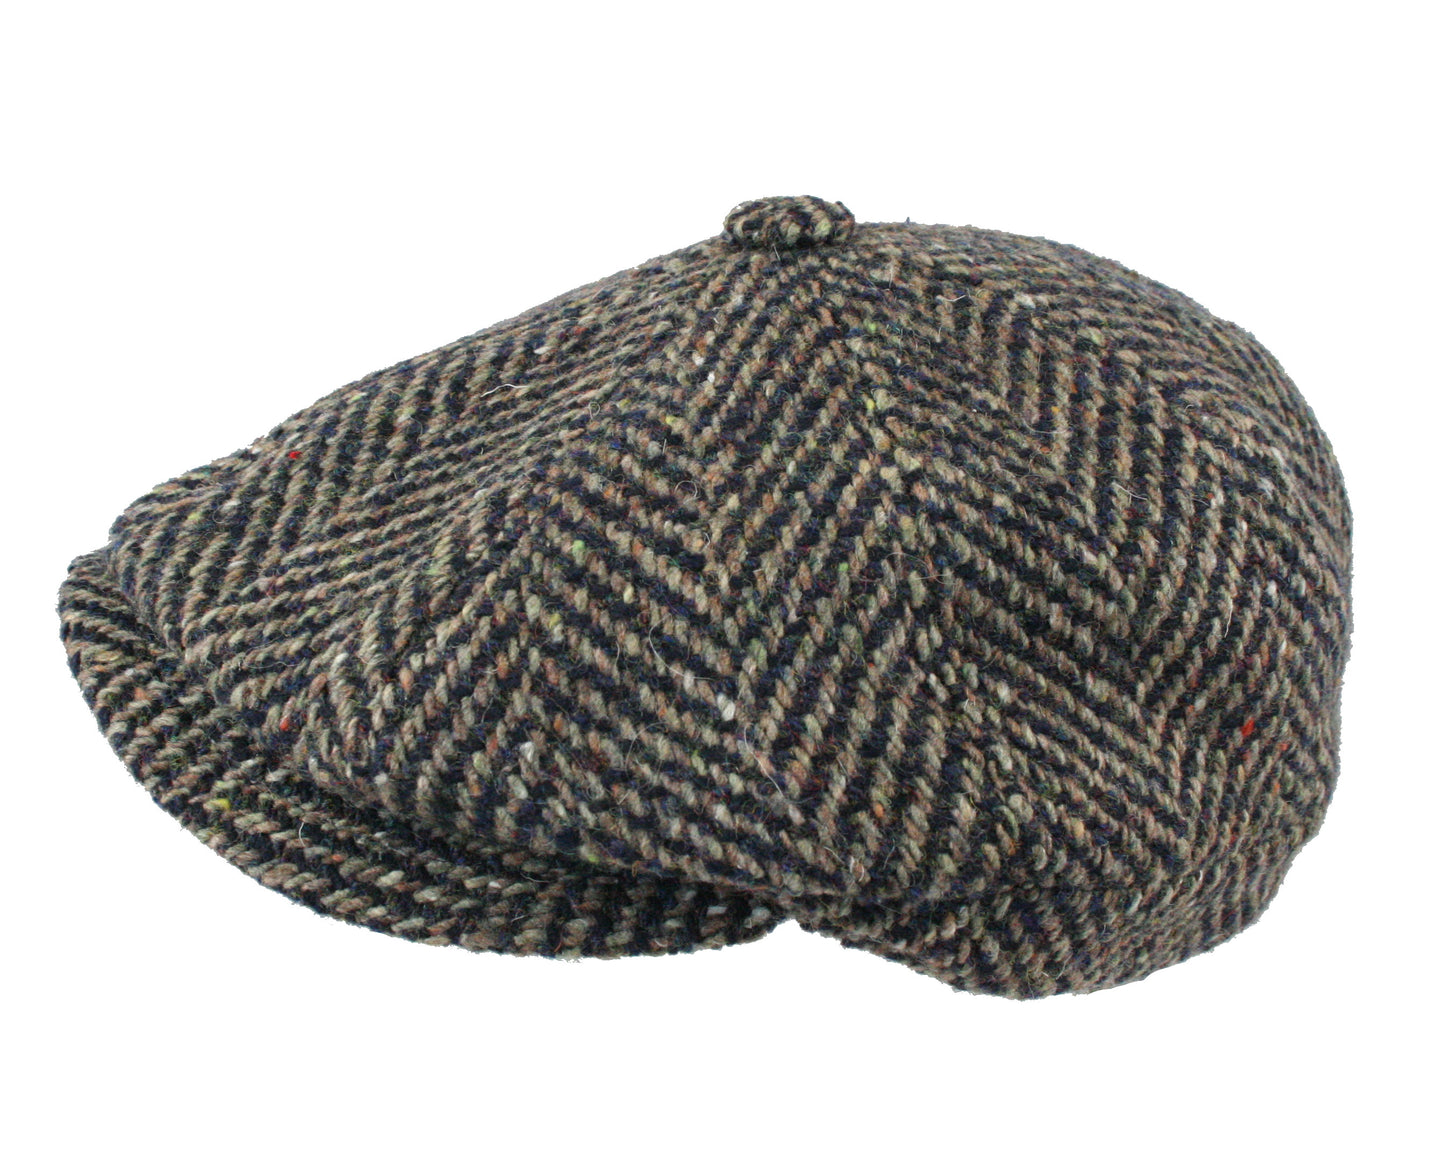 Ballonmütze aus Henry-Wolle - Marineblau